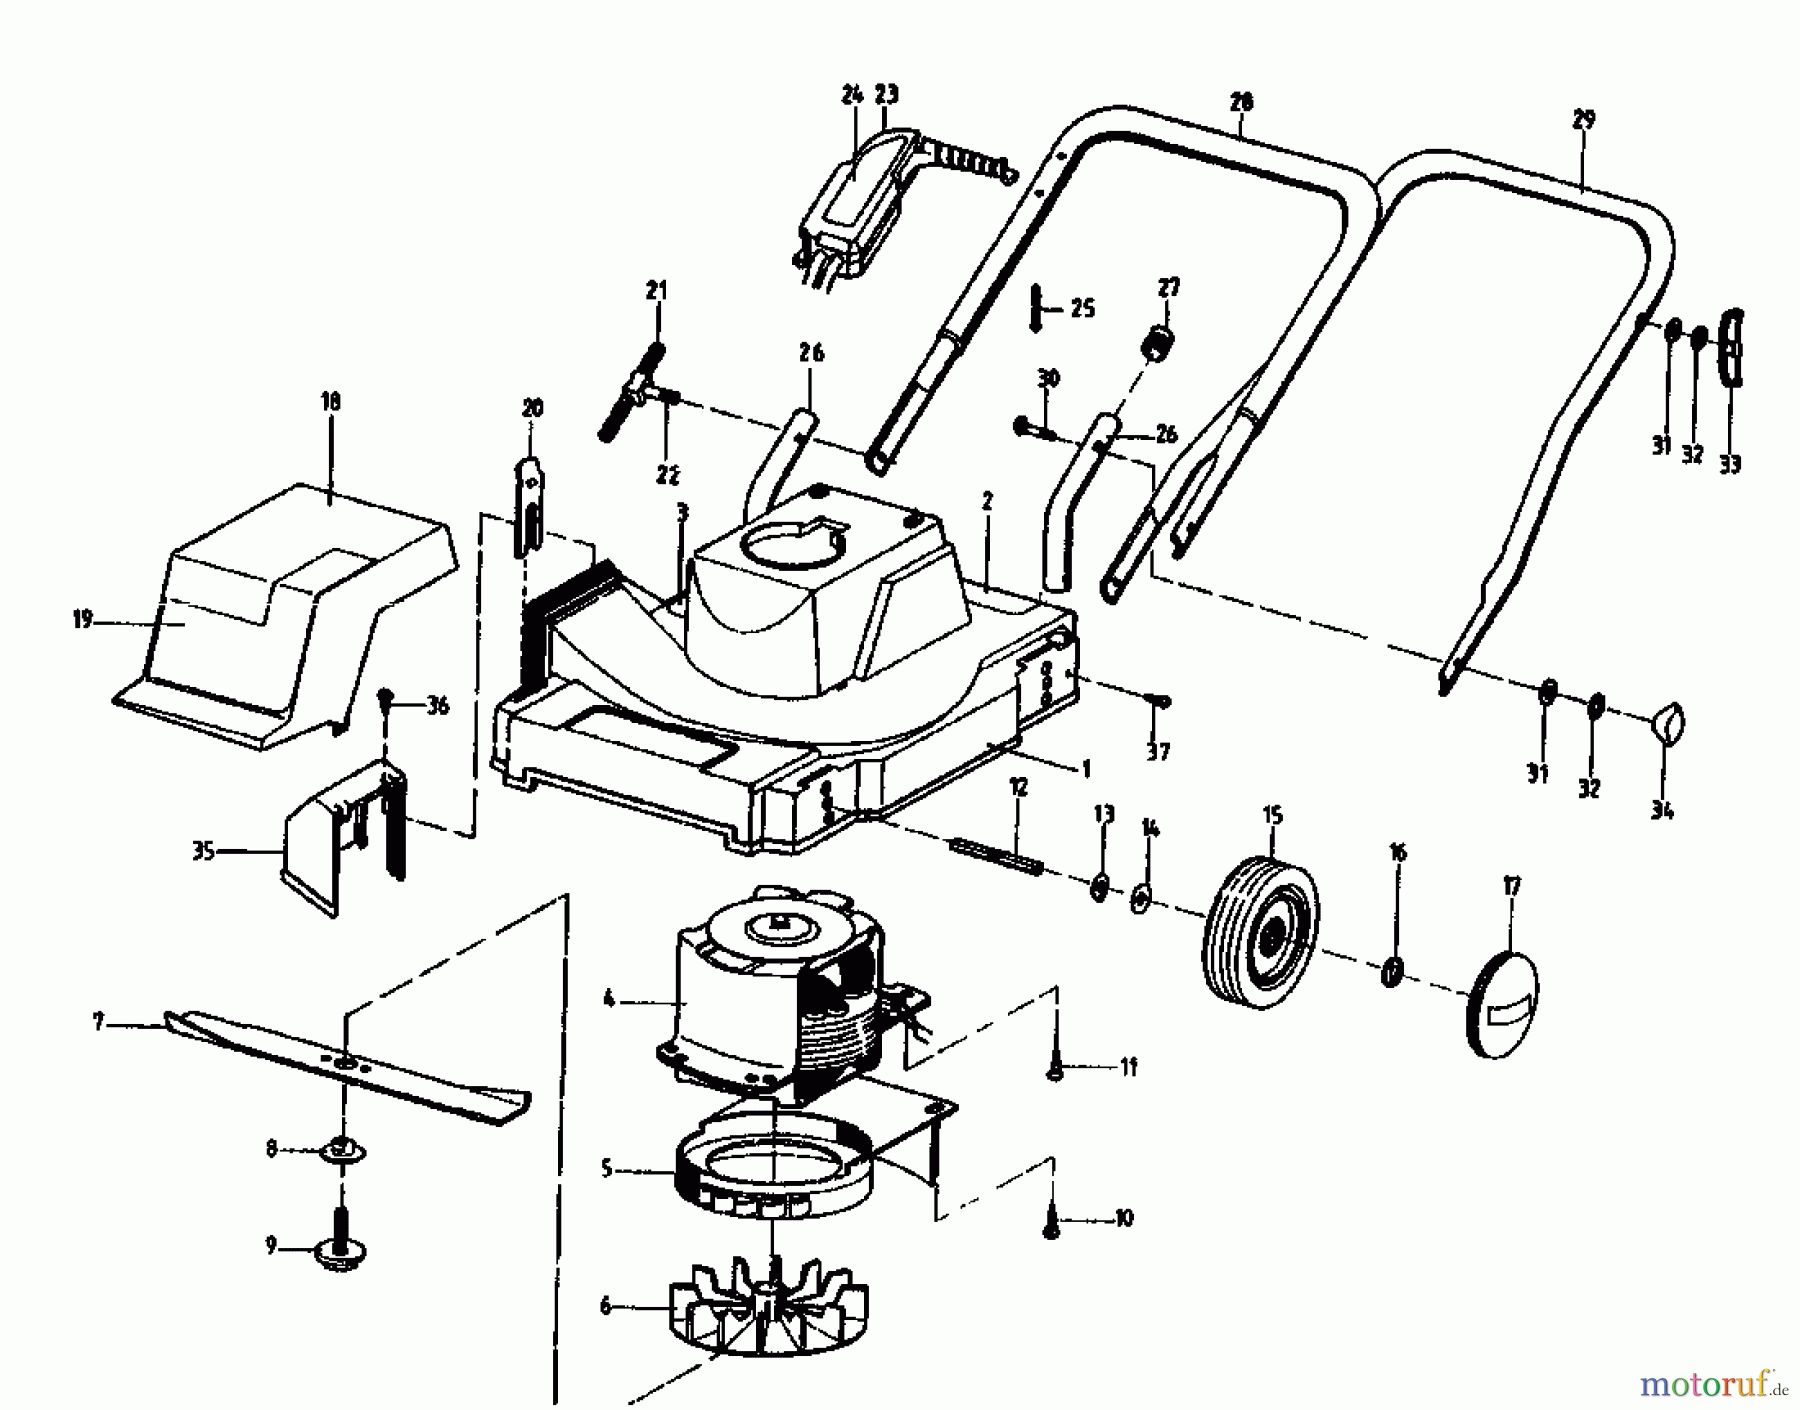  Golf Electric mower 130 SE 02804.01  (1991) Basic machine